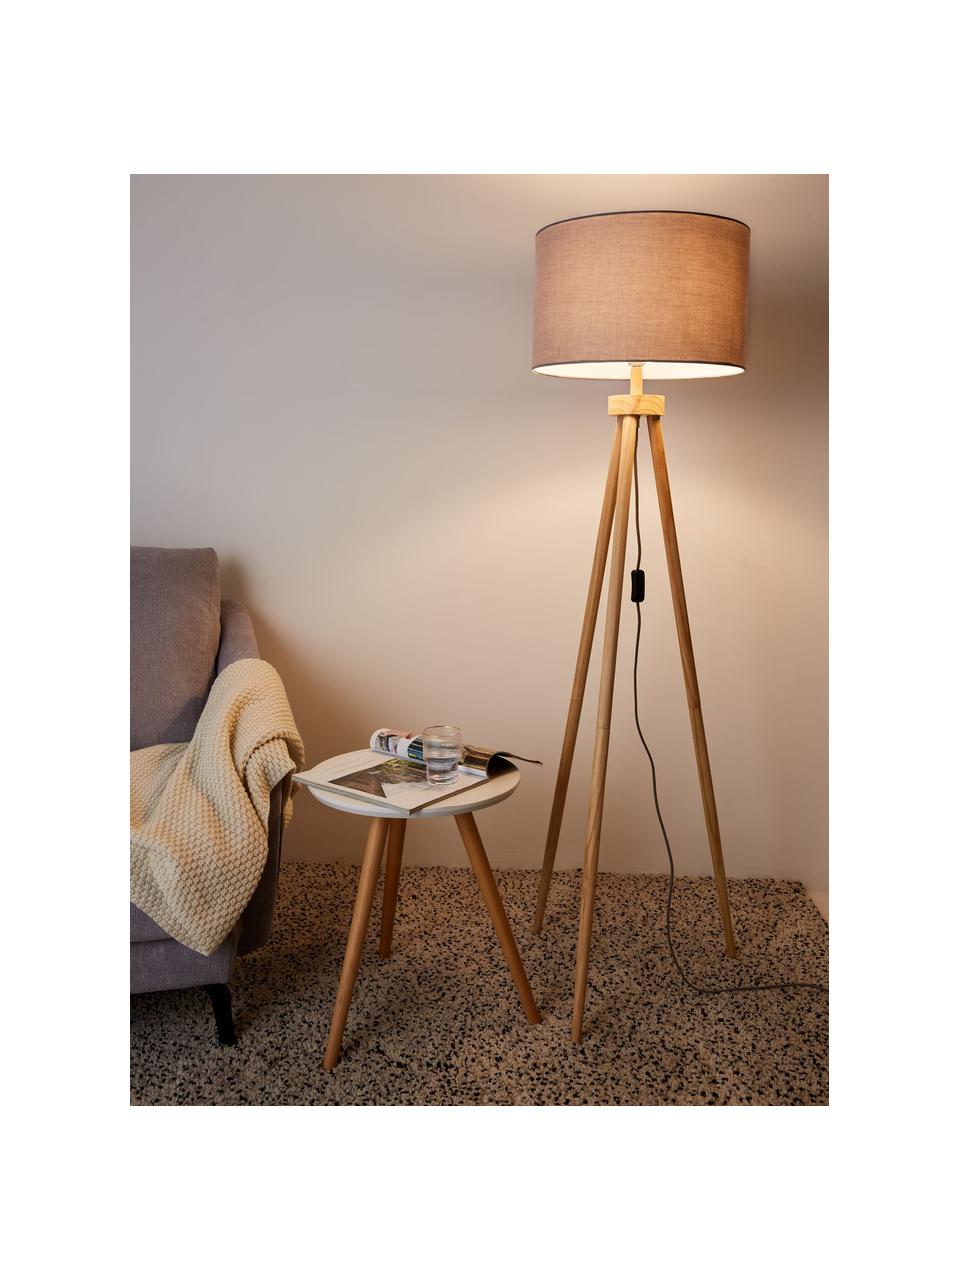 Tripod vloerlamp Grand Coziness met houten voet, Lampenkap: stof, Lampvoet: hout, Grijs, houtkleurig, Ø 51 x H 147 cm